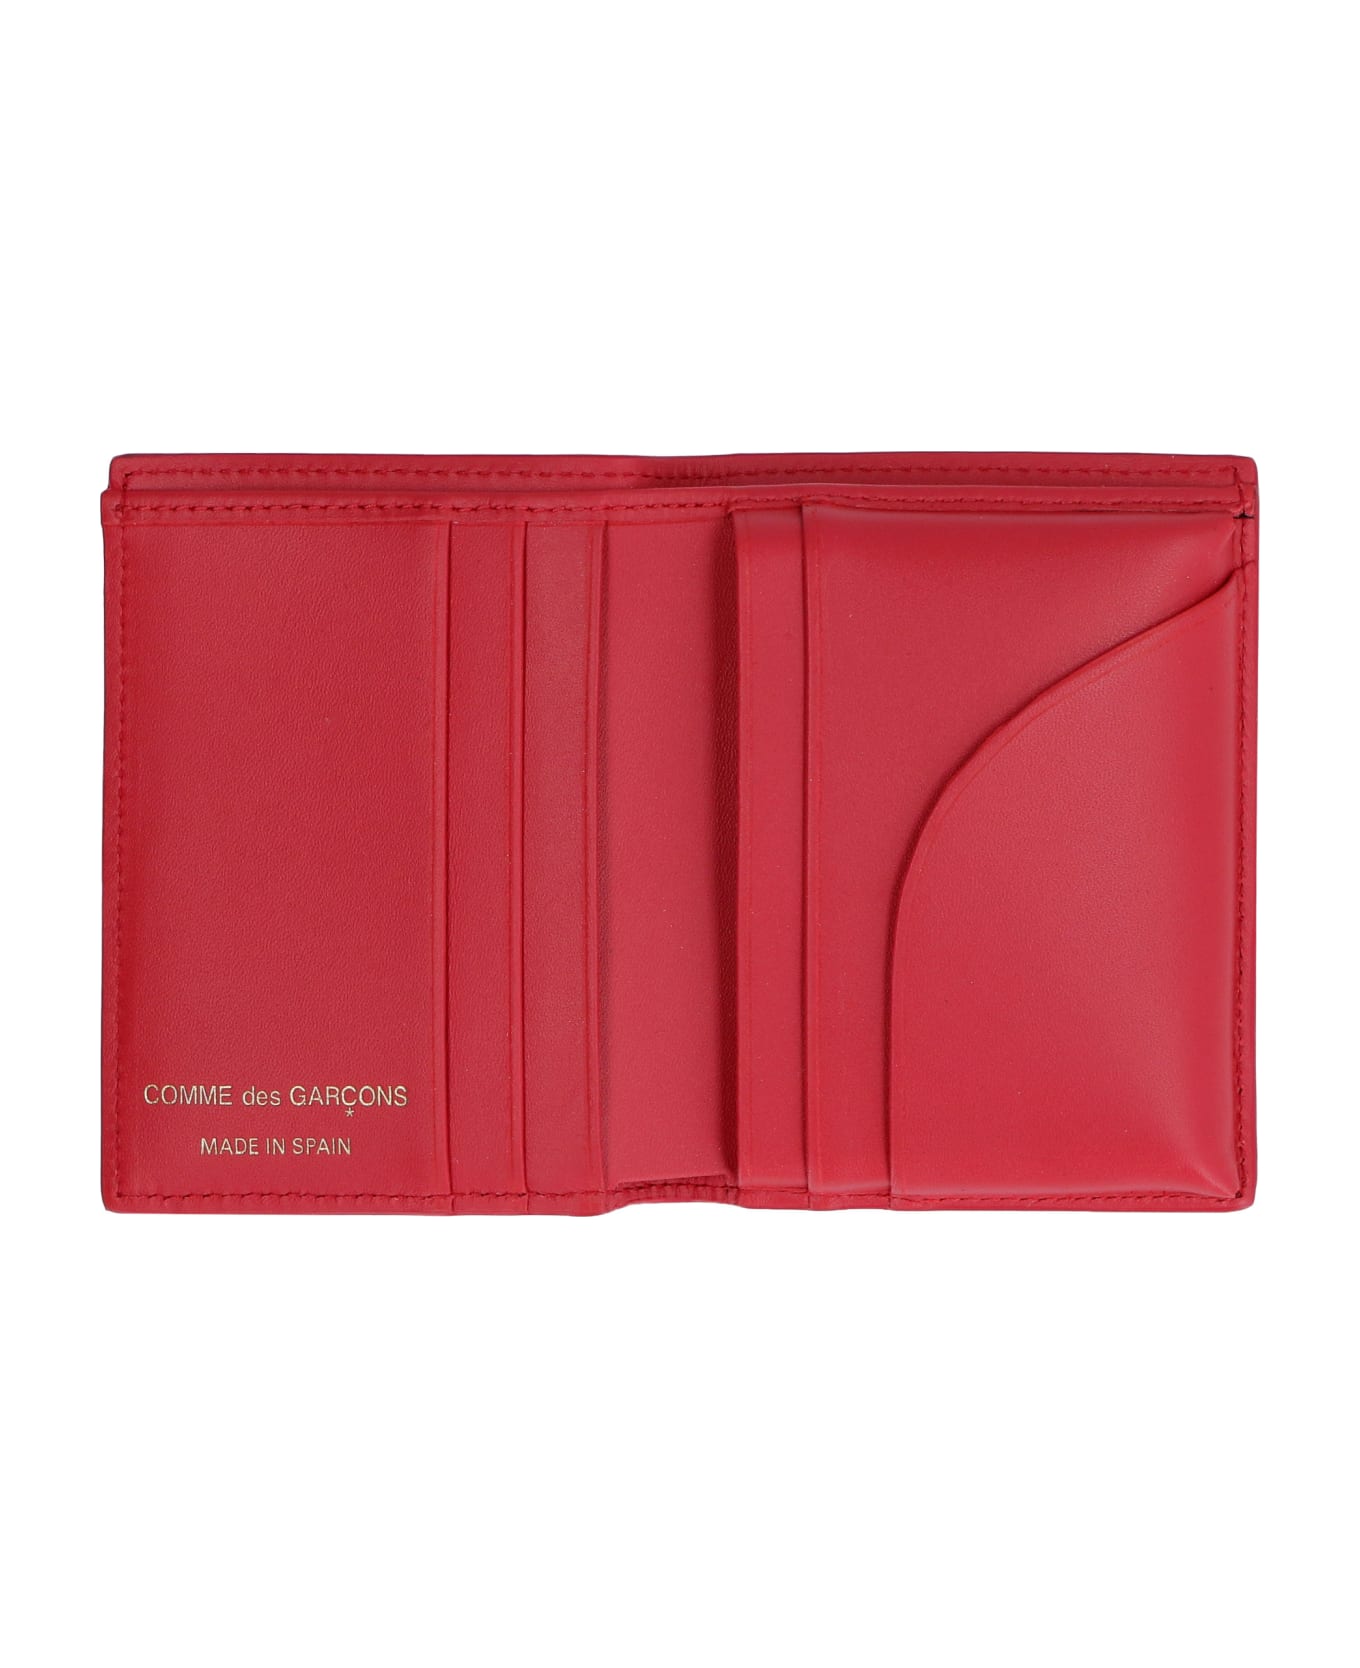 Comme des Garçons Wallet Printed Leather Wallet - red 財布